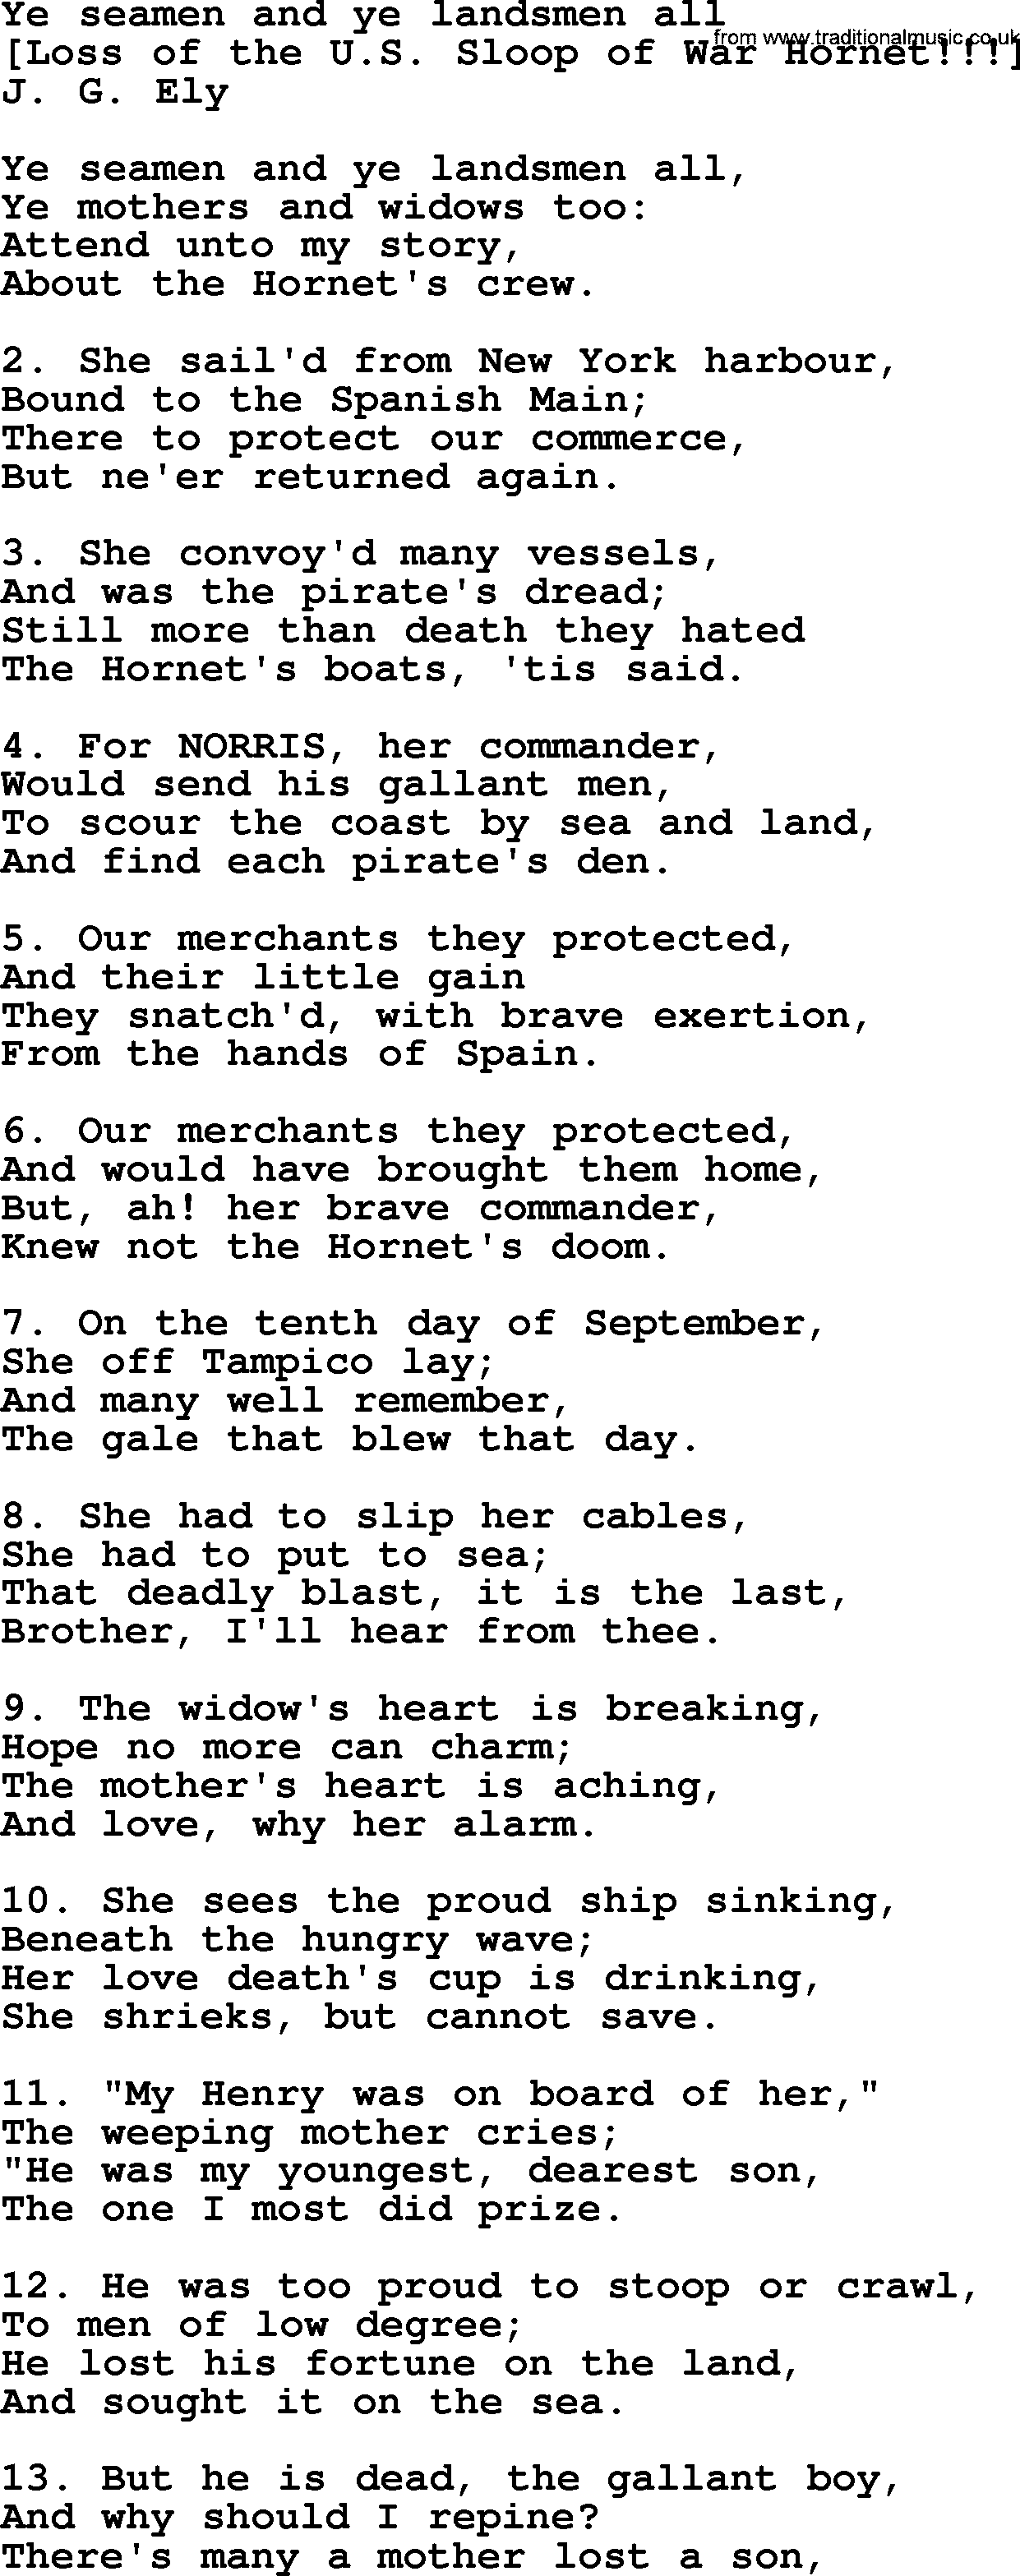 Old American Song: Ye Seamen And Ye Landsmen All, lyrics